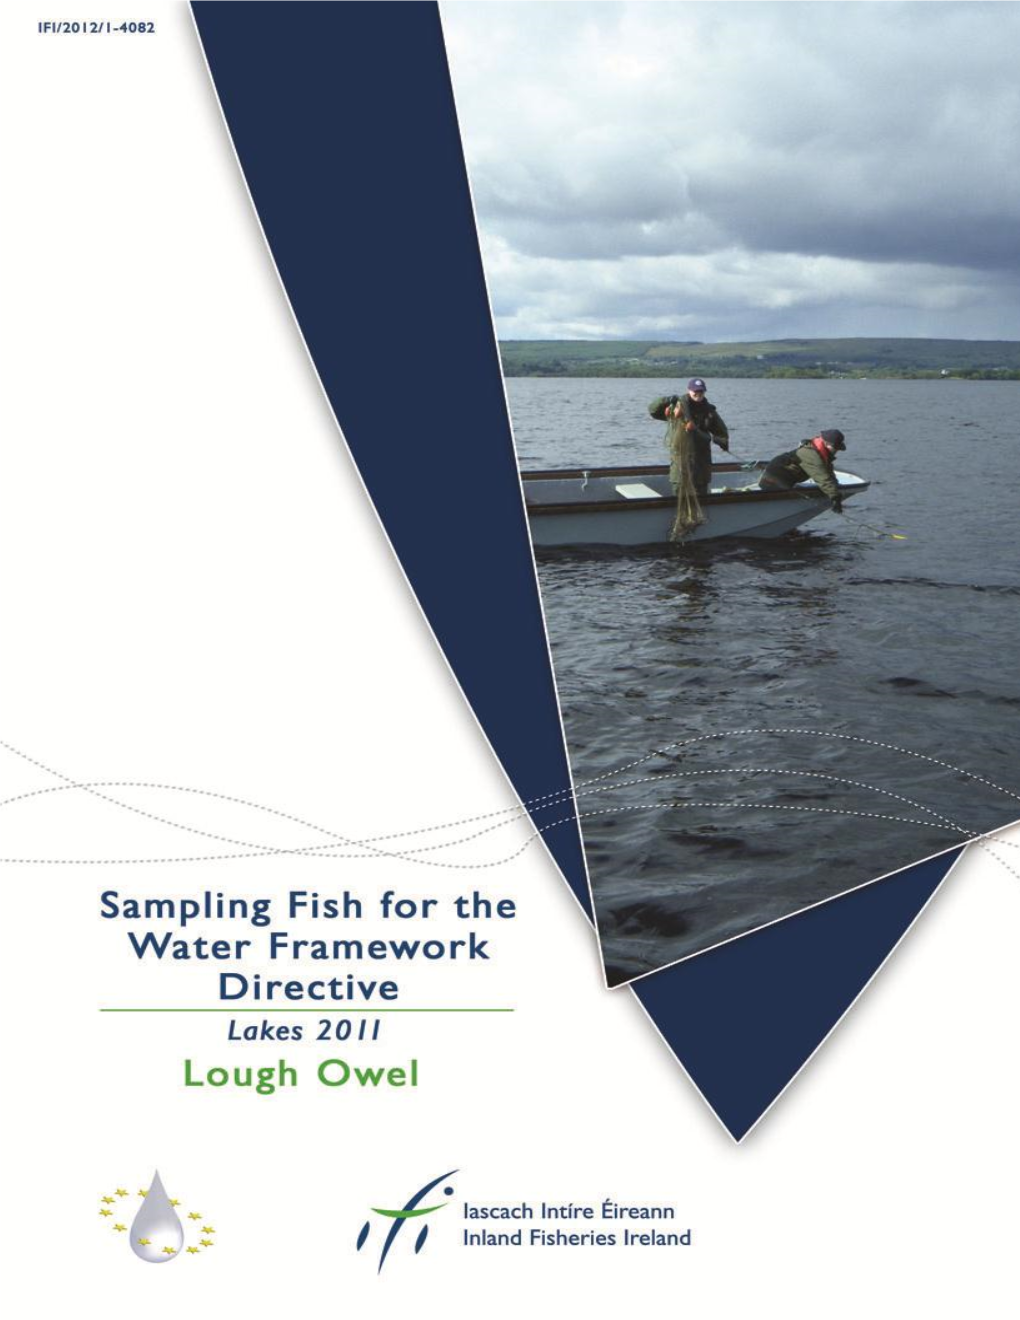 Water Framework Directive Fish Stock Survey of Lough Owel, July 2011